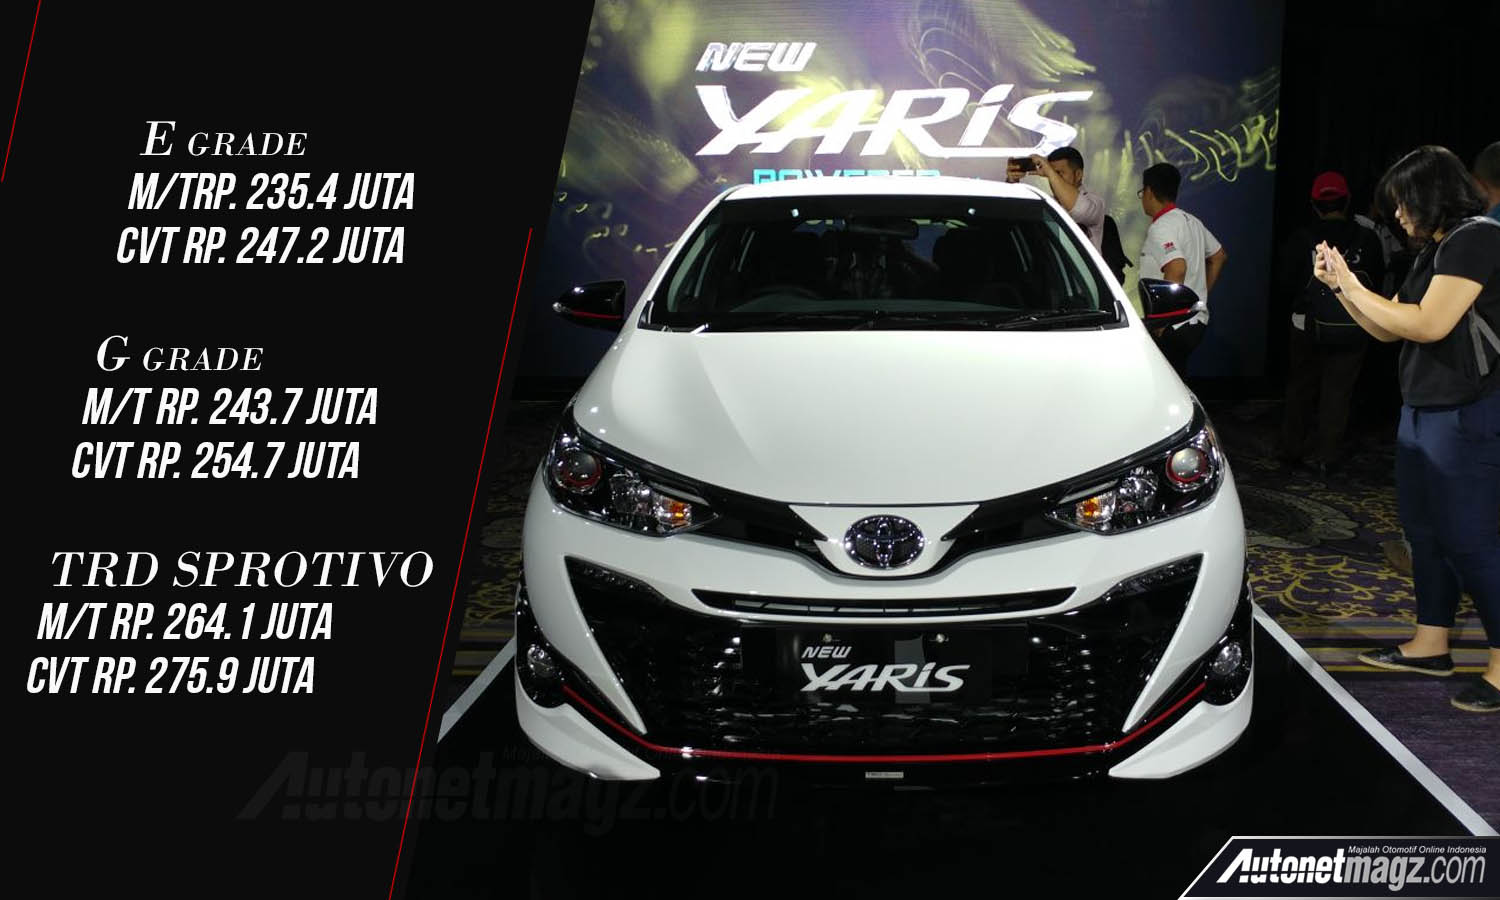 Berita, harga Toyota Yaris Facelift 2018: Toyota Yaris Facelift 2018 Meluncur, Harga Naik Tipis!